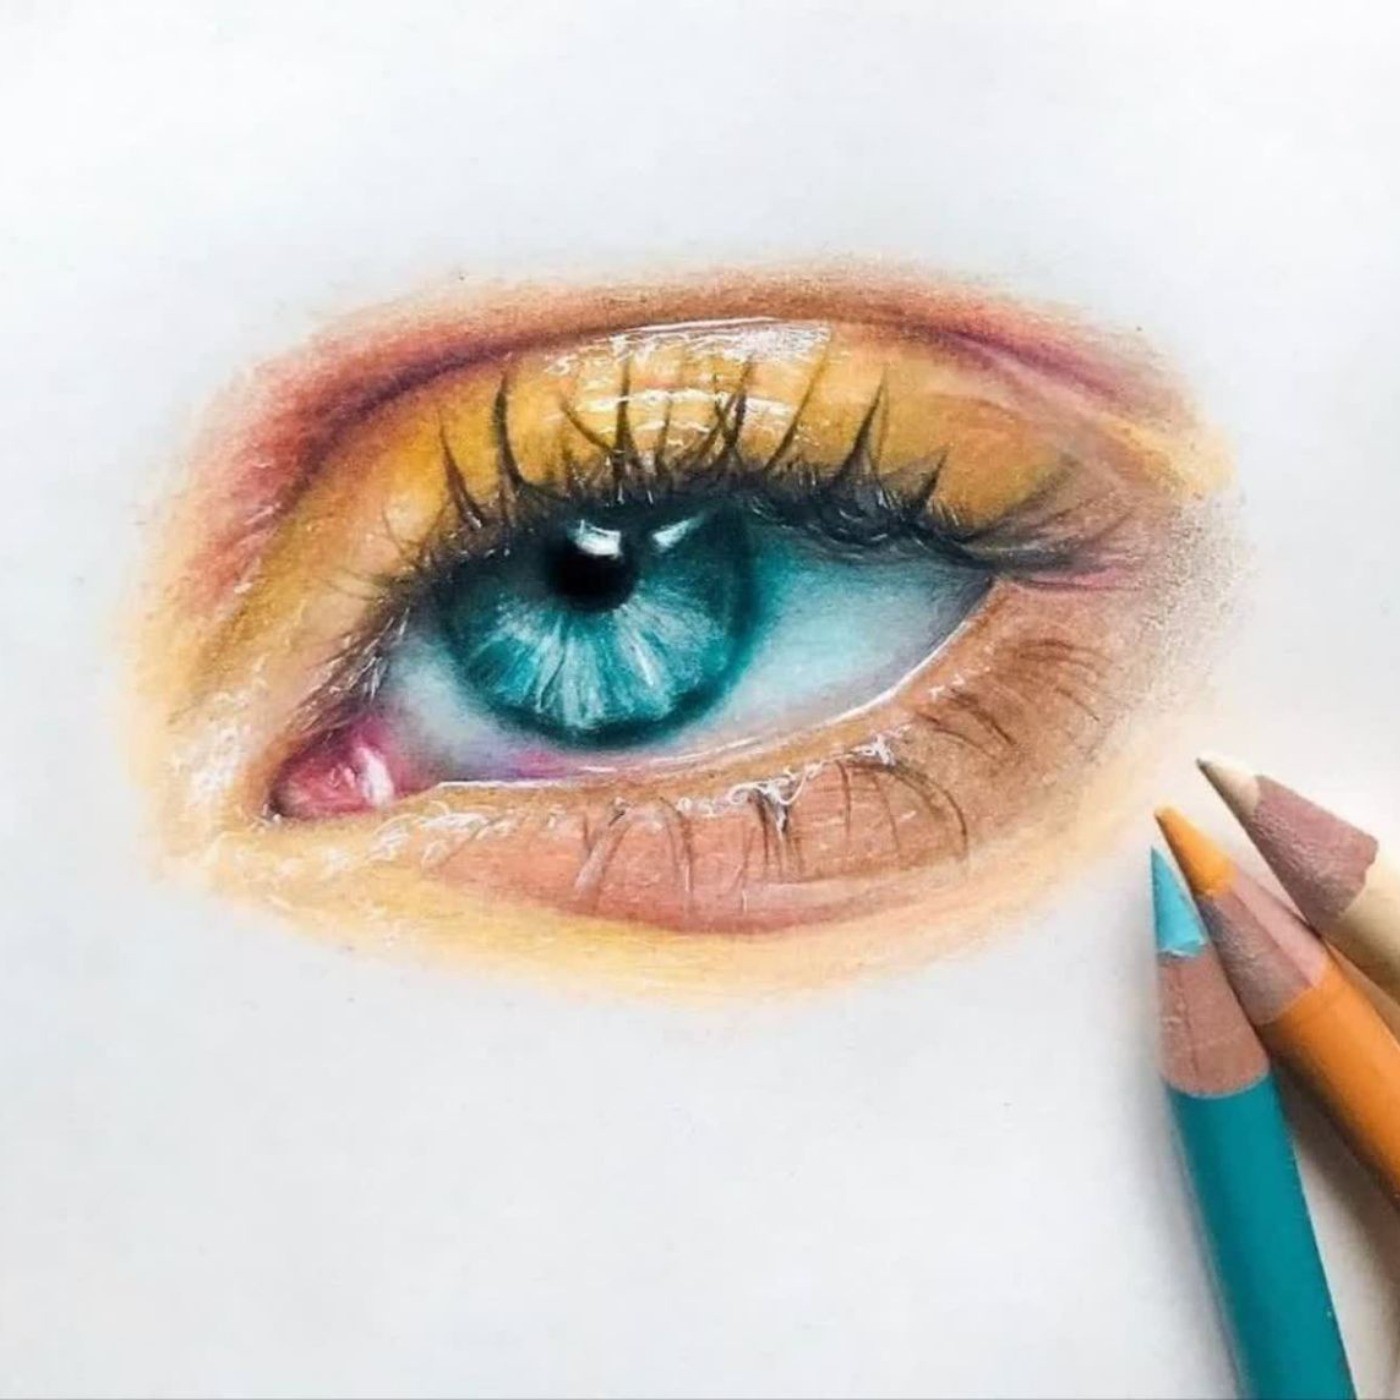 نقاشی /چشم رنگی /مداد رنگی 🖌🖍👁👀